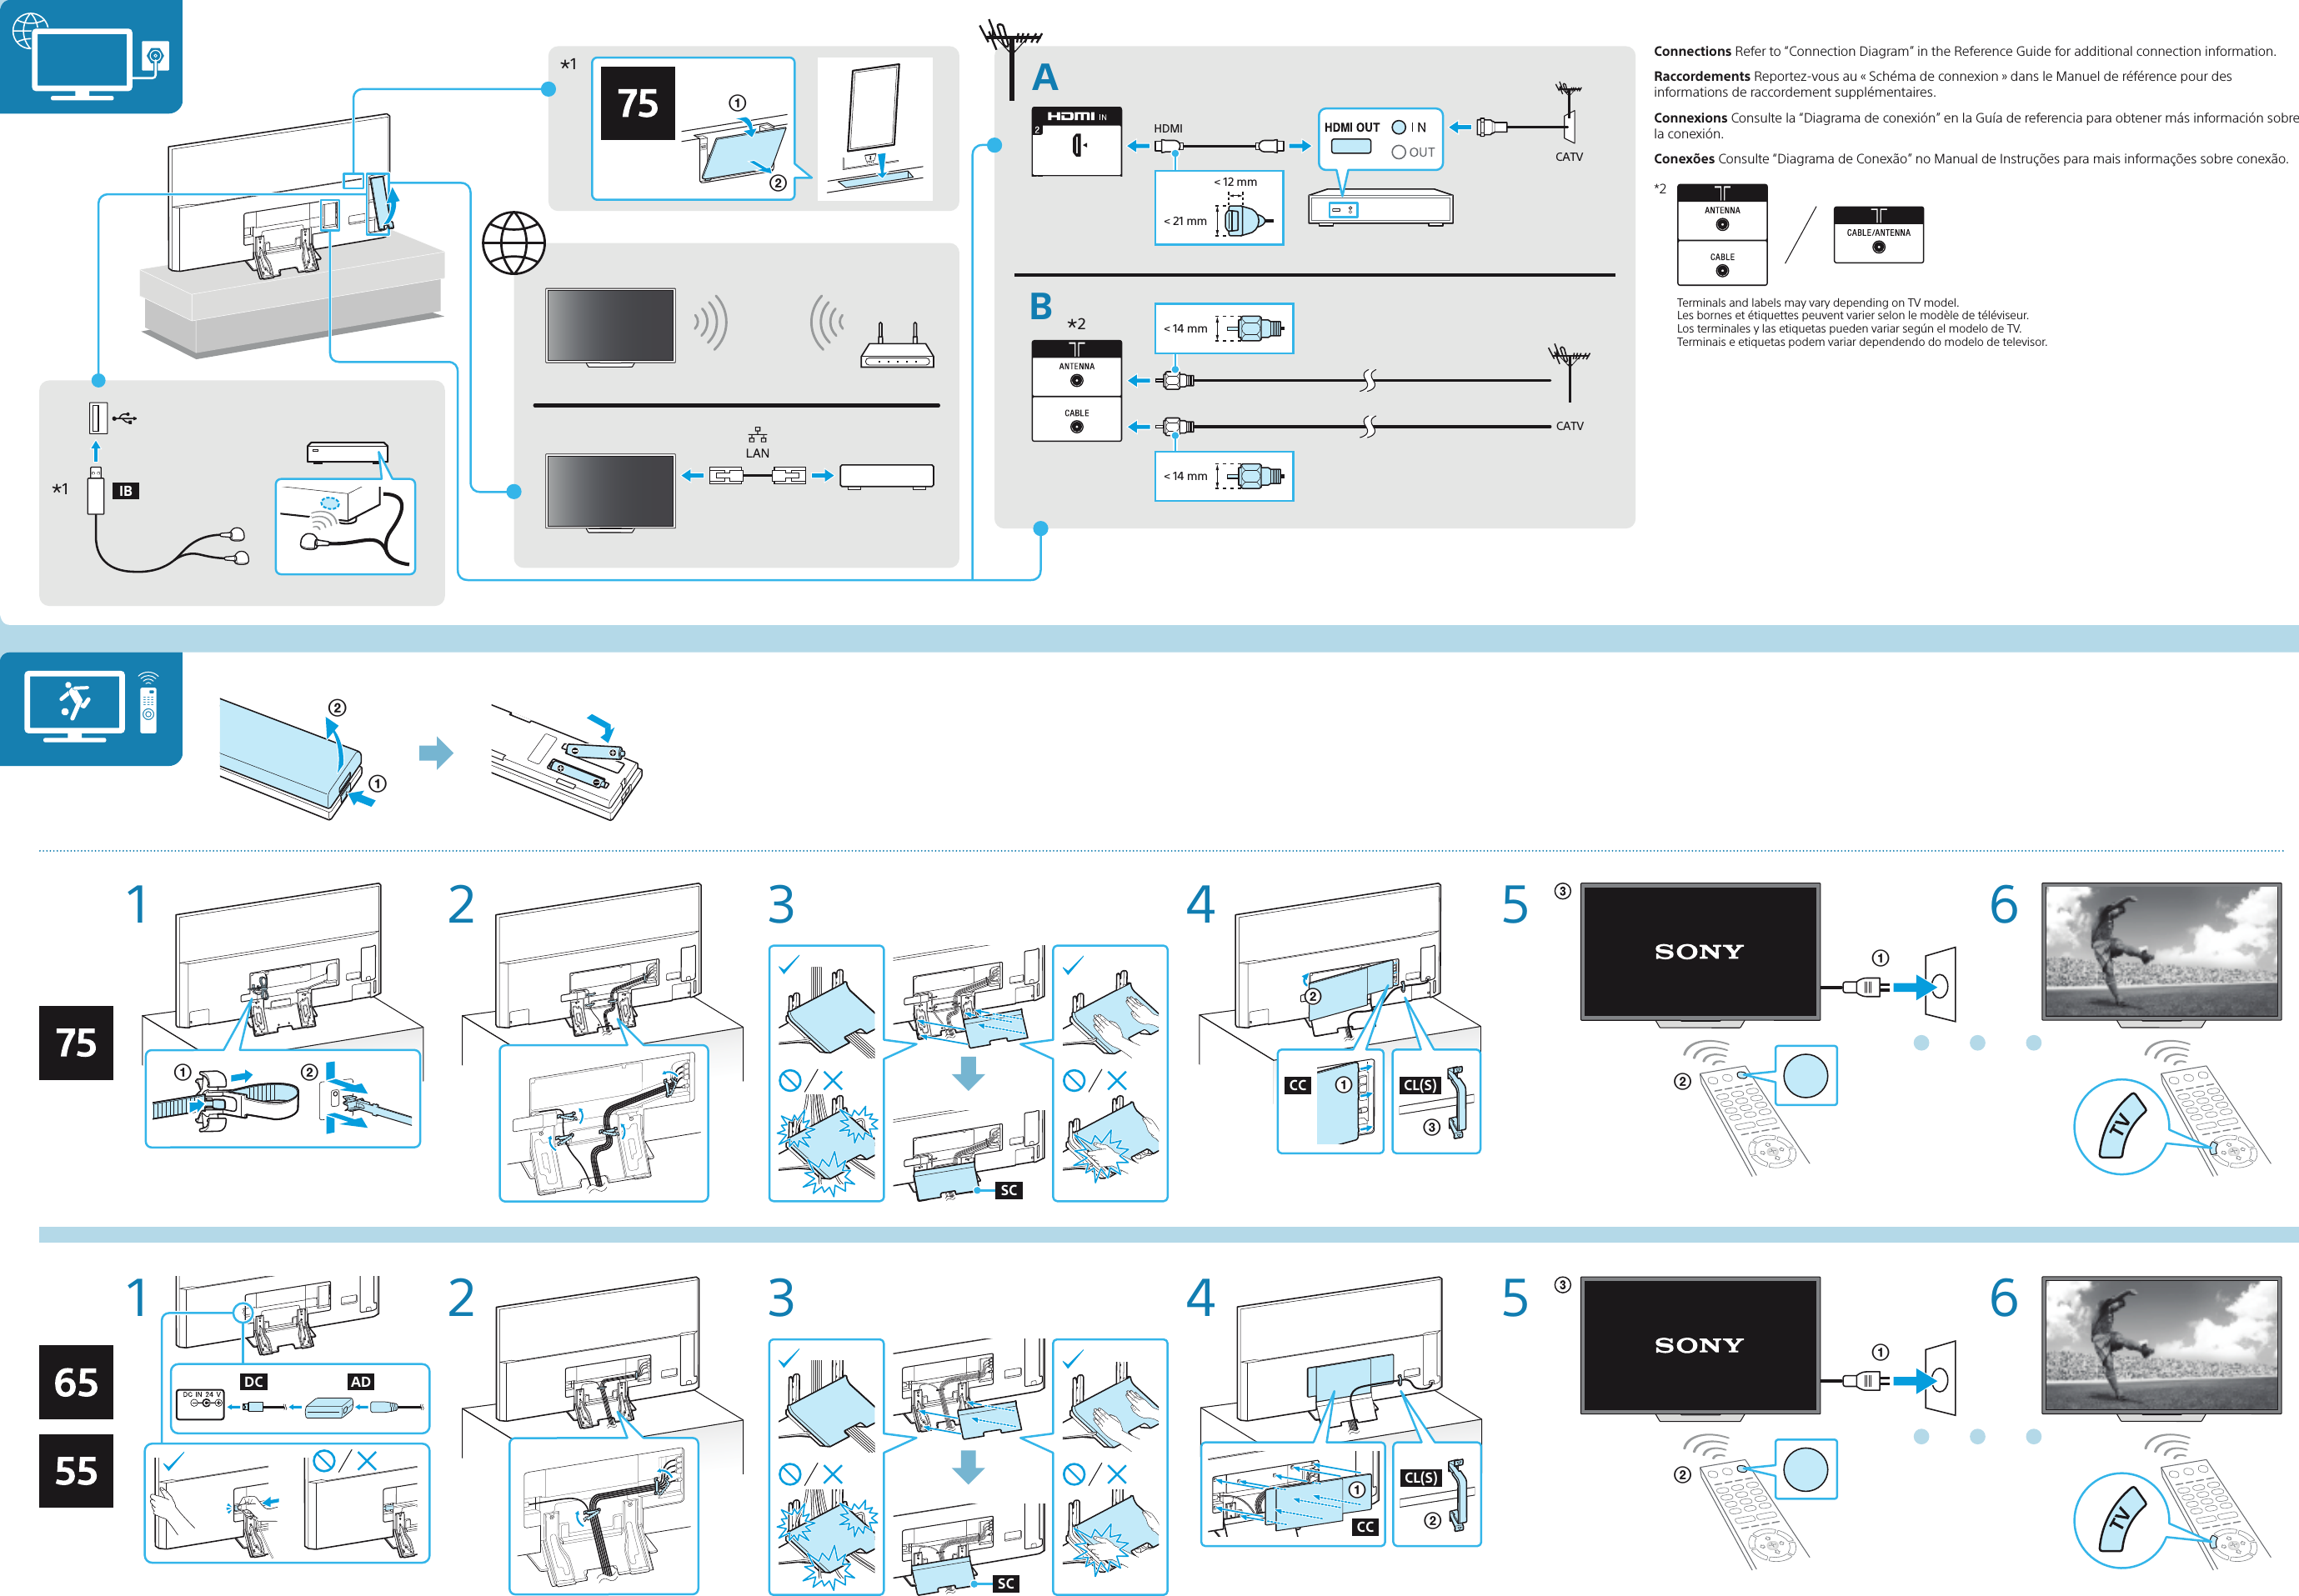 Page 2 of 2 - Sony XBR-55X930D XBR-75X940D / 65X937D 65X935D 65X930D 55X930D User Manual Setup Guide QSG 4584892121